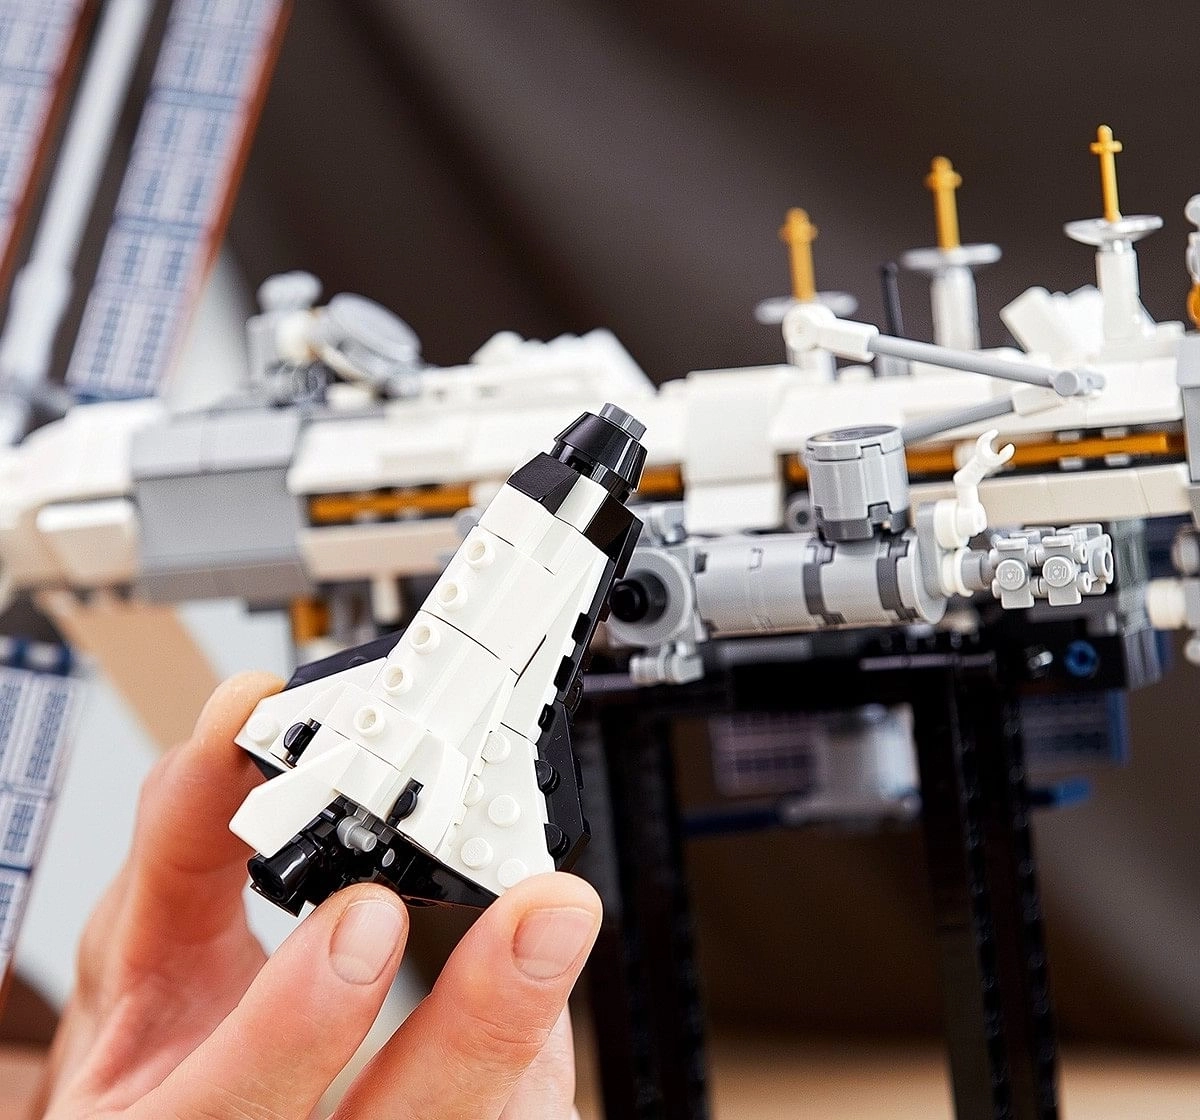 LEGO Ideas International Space Station 21321